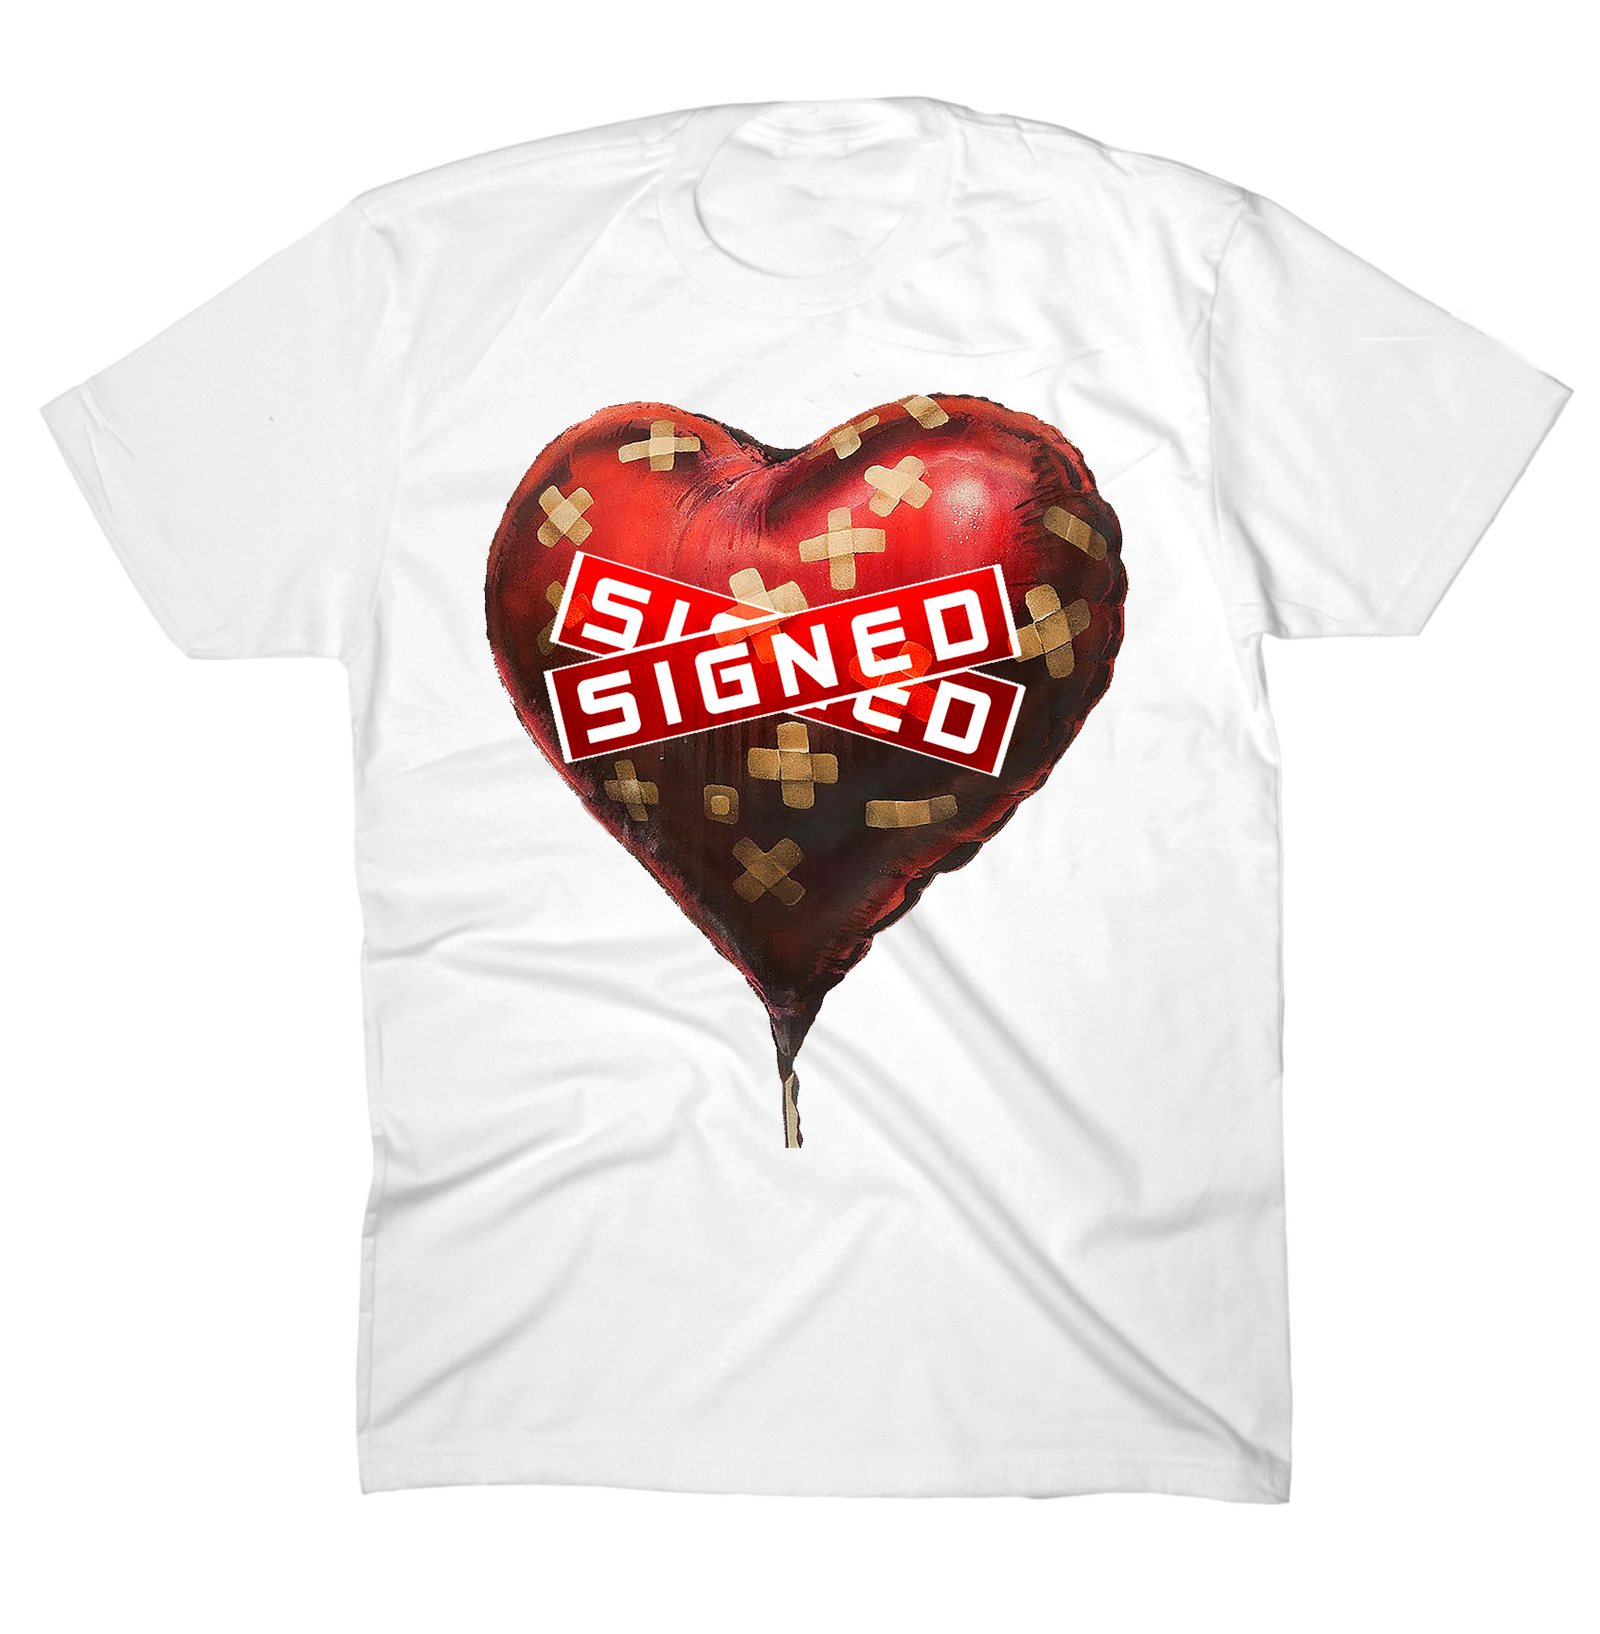 Kids Signed Heart T-Shirt - Signedbymcfly